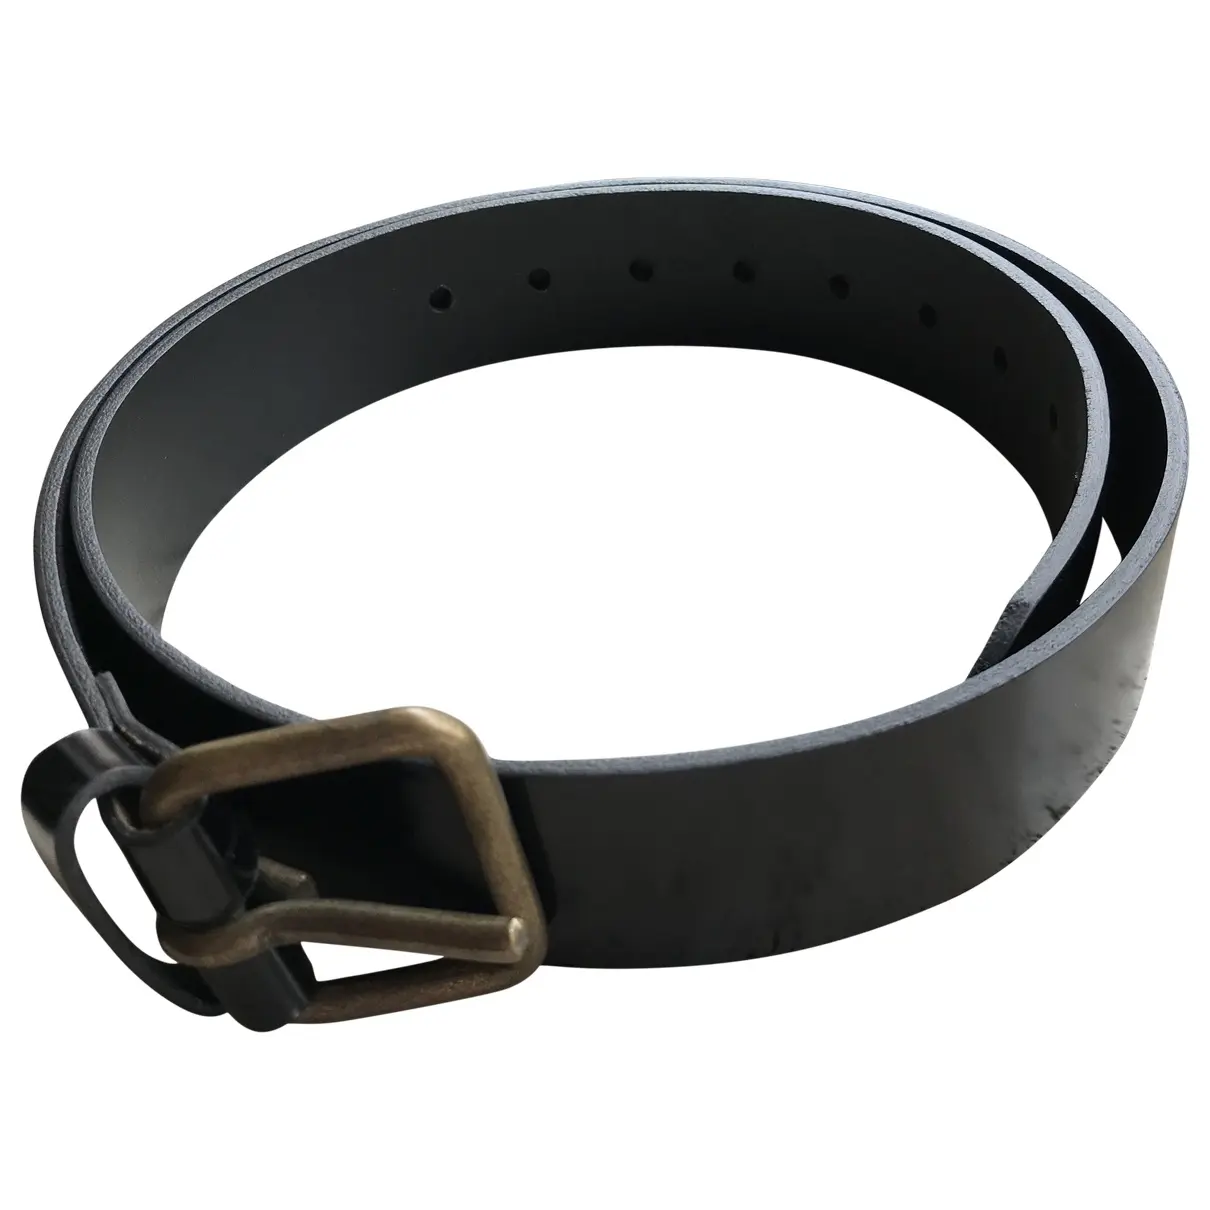 Leather belt Marc Jacobs